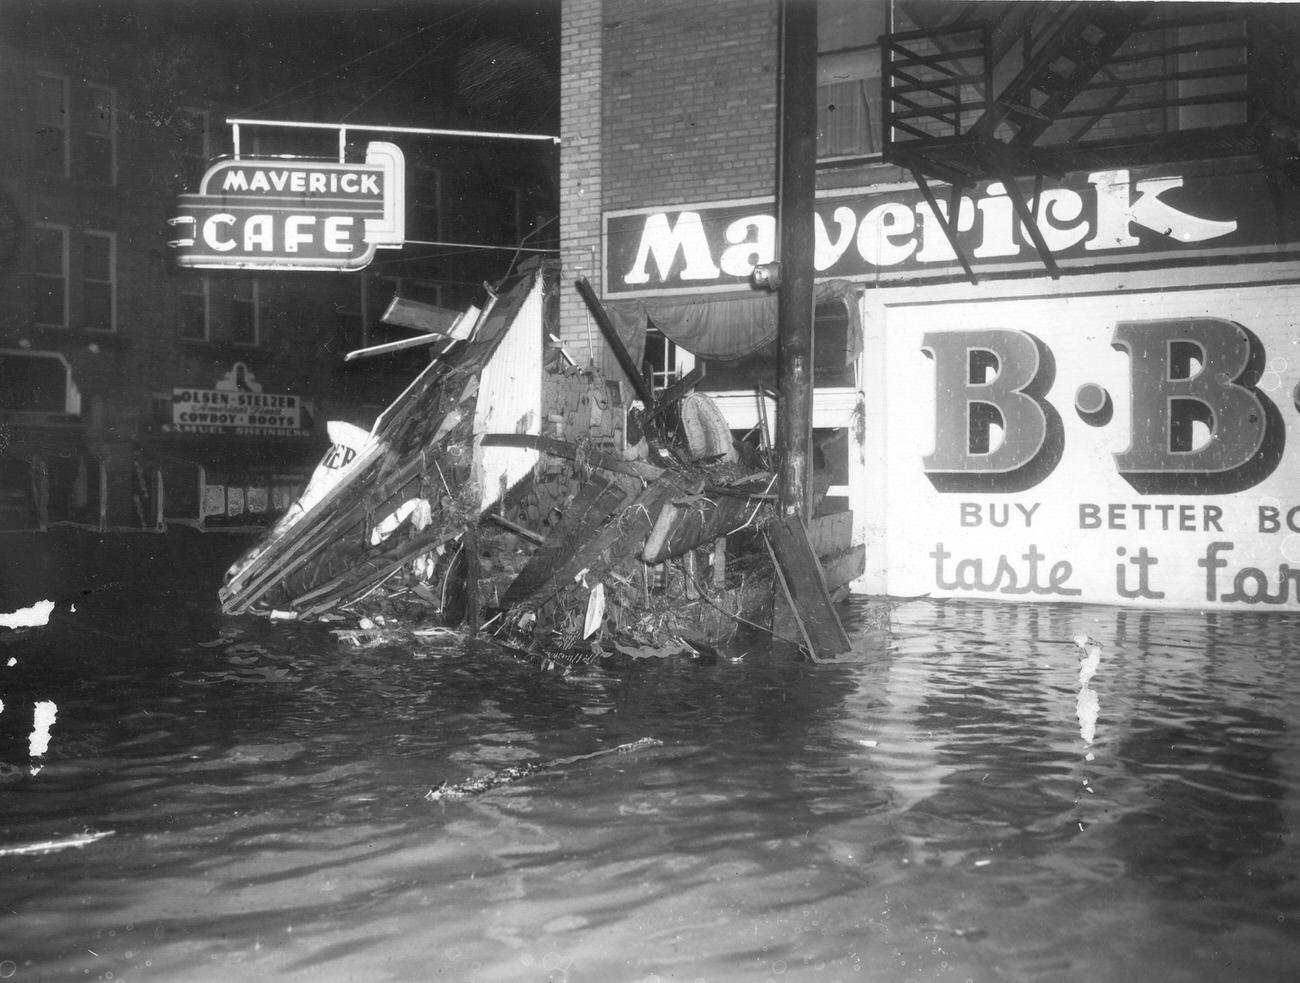 The flood of Marine Creek which submerged Maverick Café, 1942